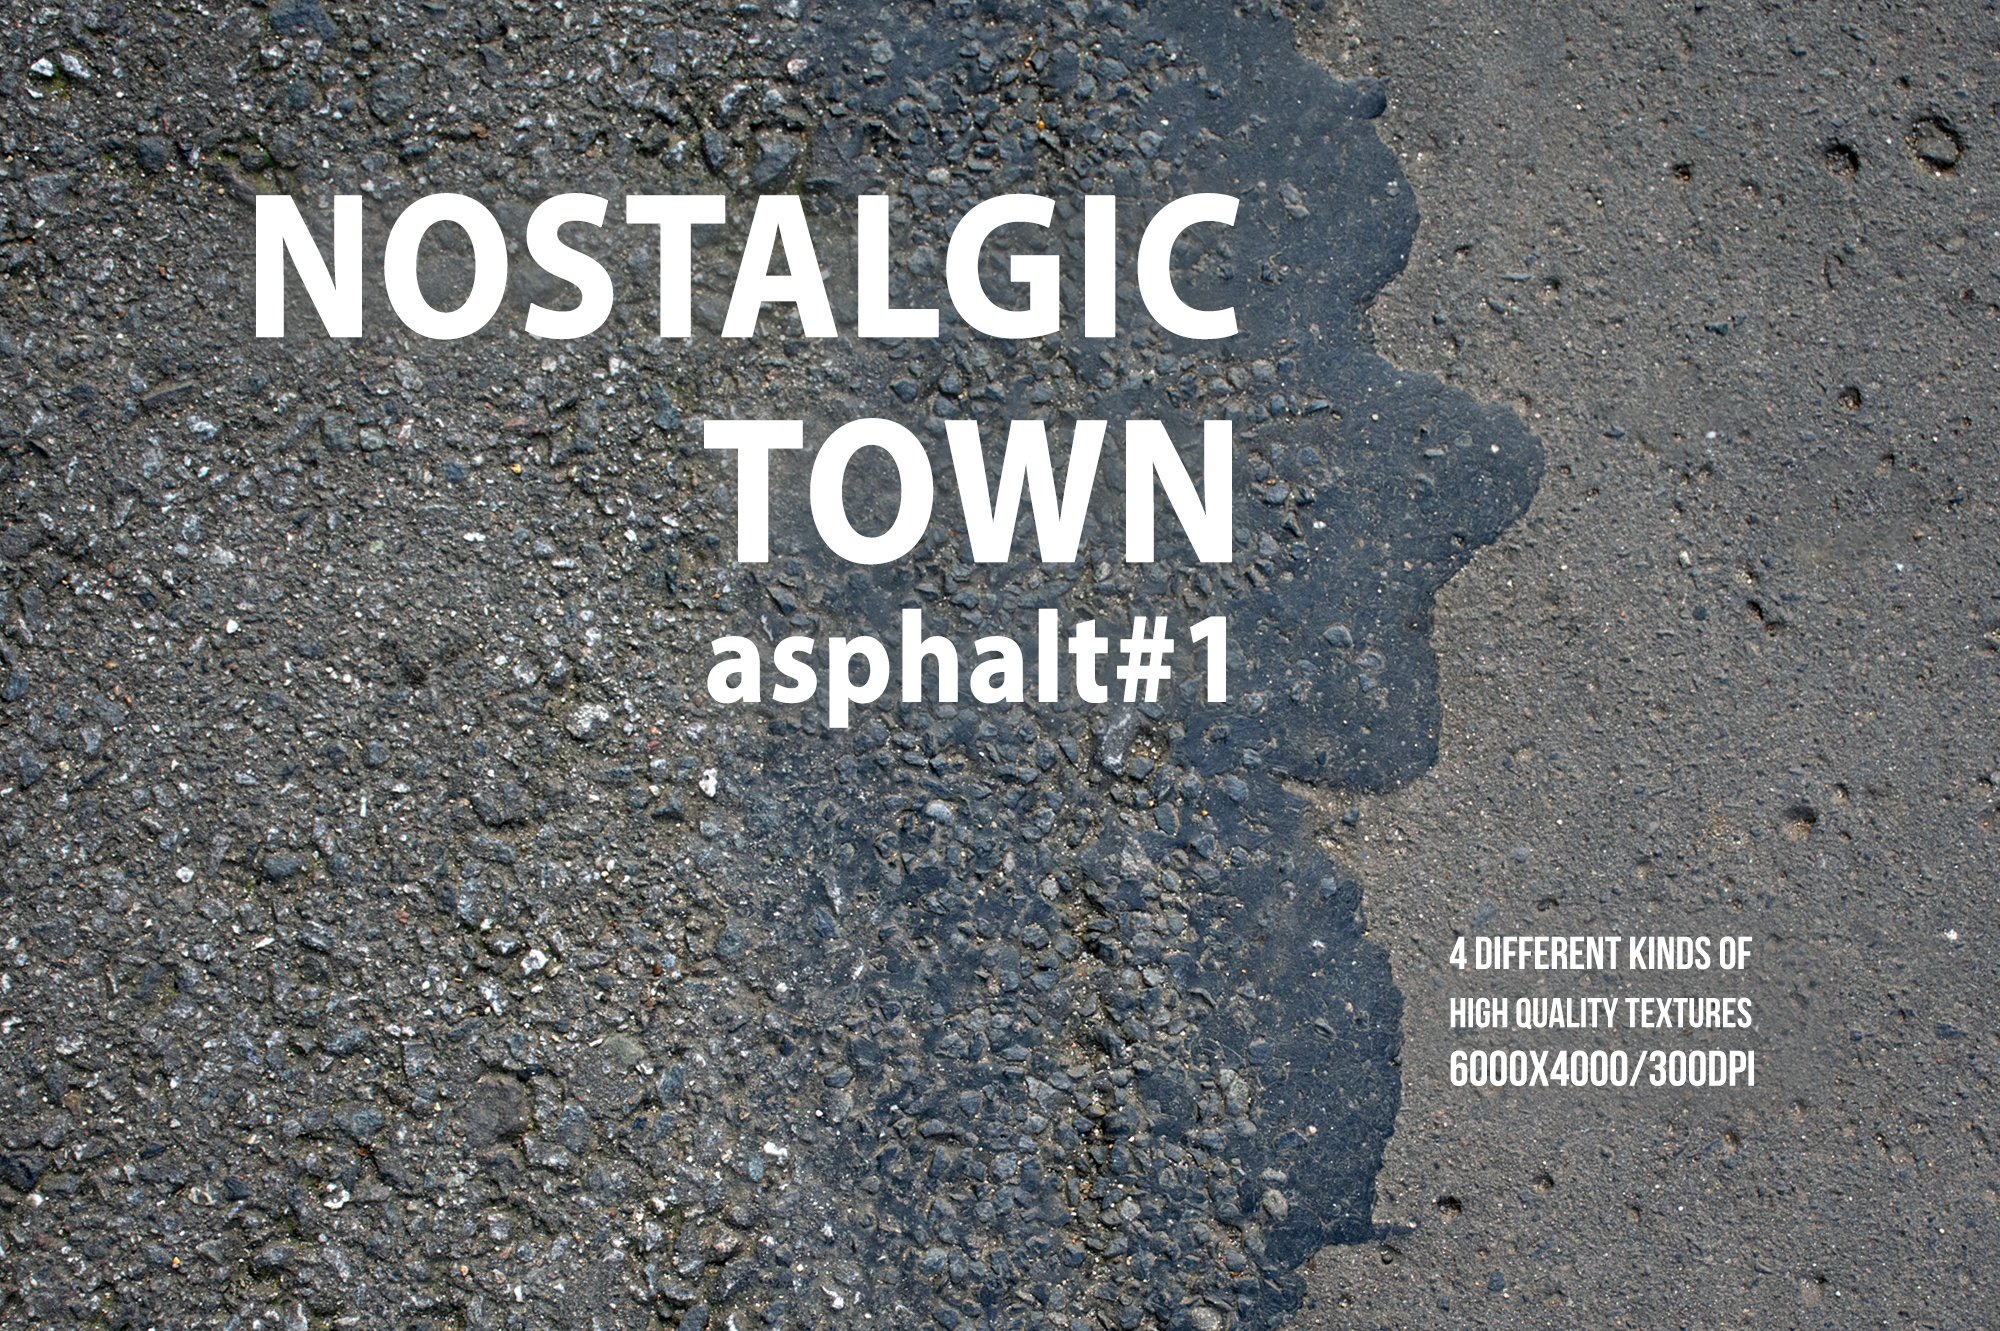 Nostalgic Town: Asphalt#1 cover image.